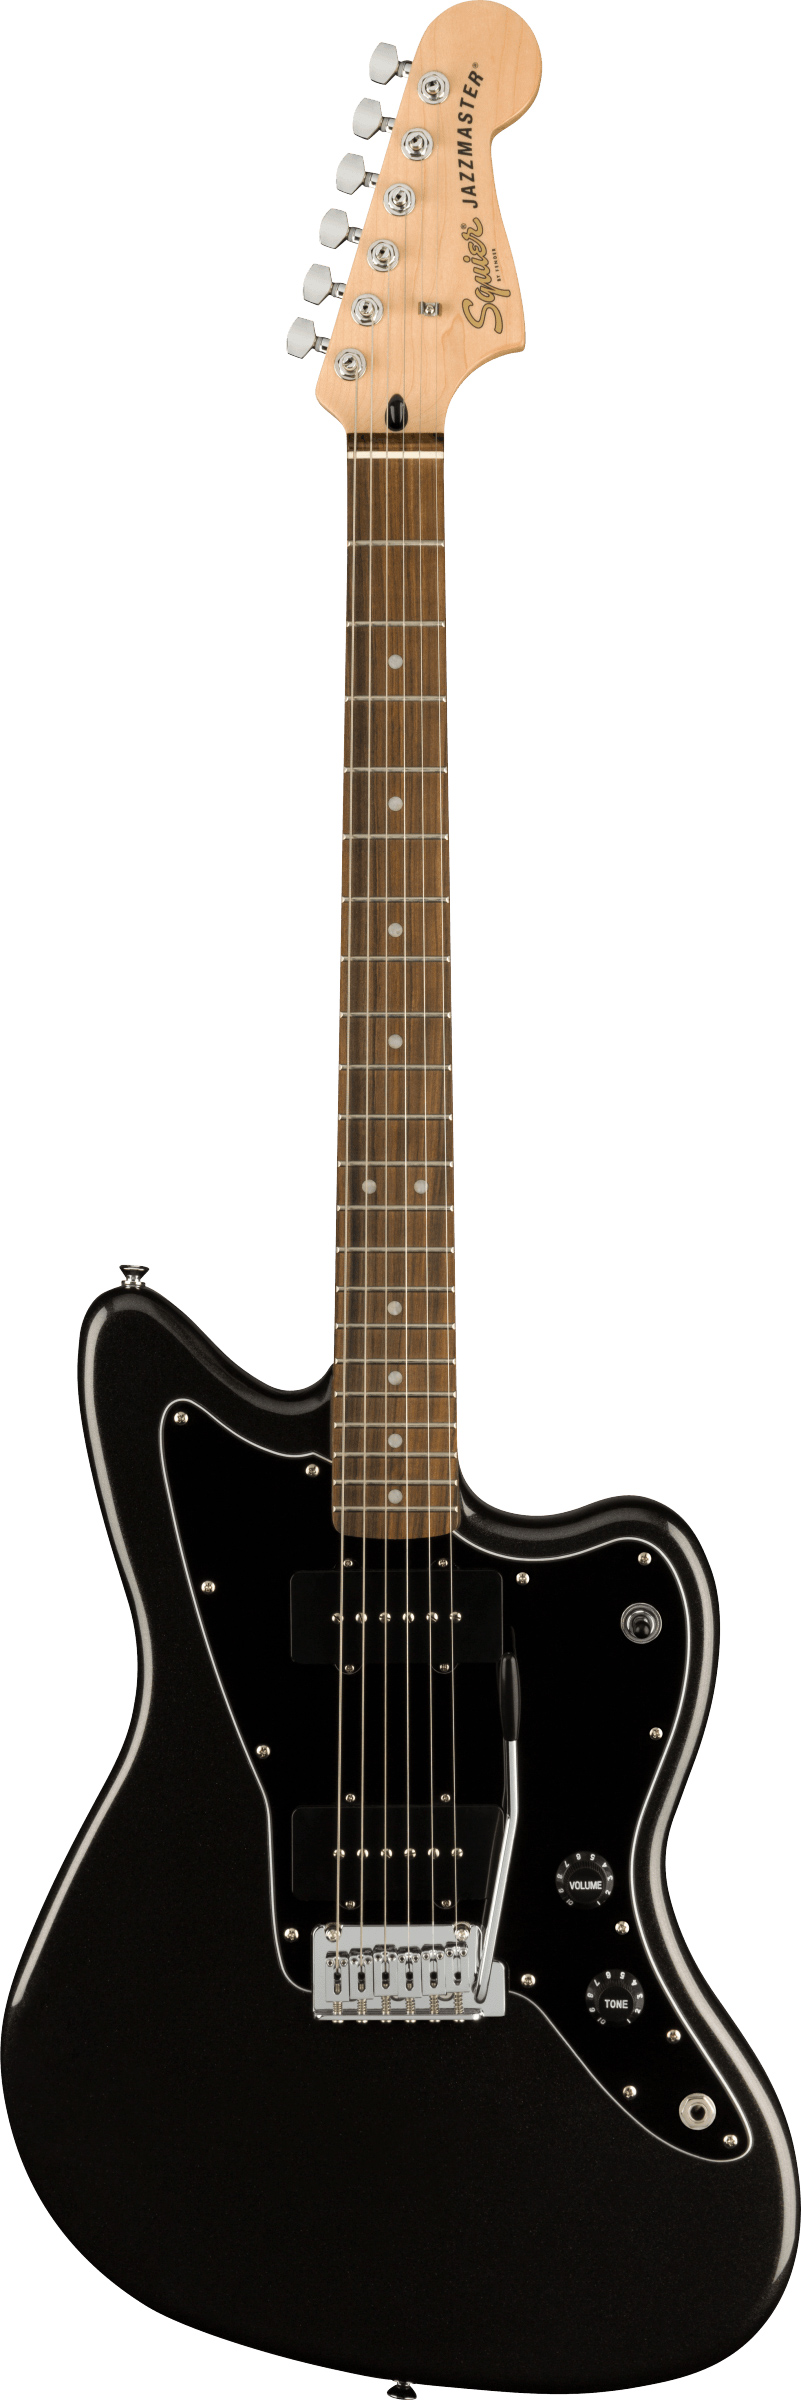 Fender Squier Affinity Jazzmaster - Metallic Black w/ Gig Bag | eBay